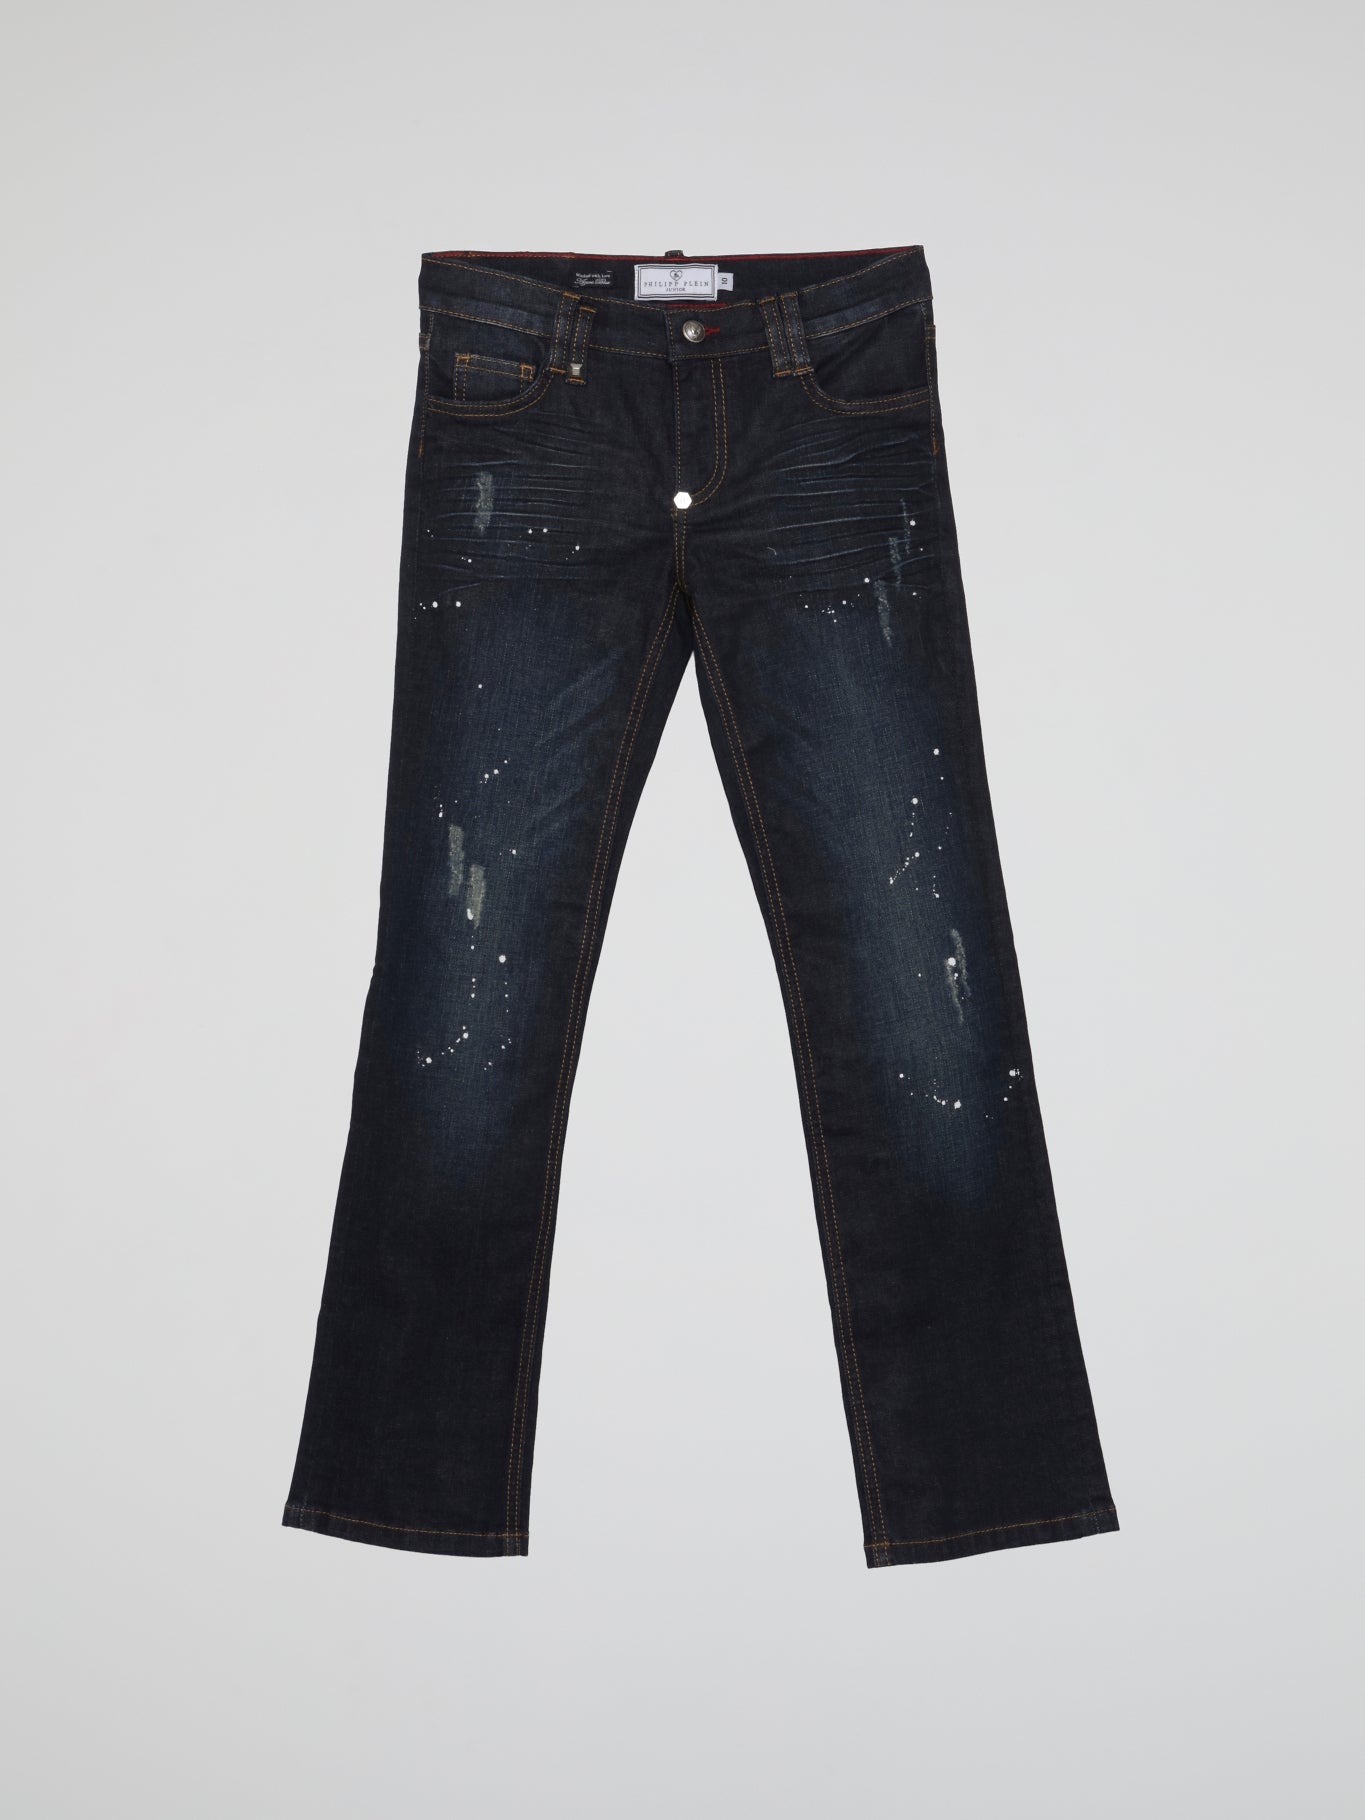 Navy Distressed Straight Cut Denim Jeans (Kids)